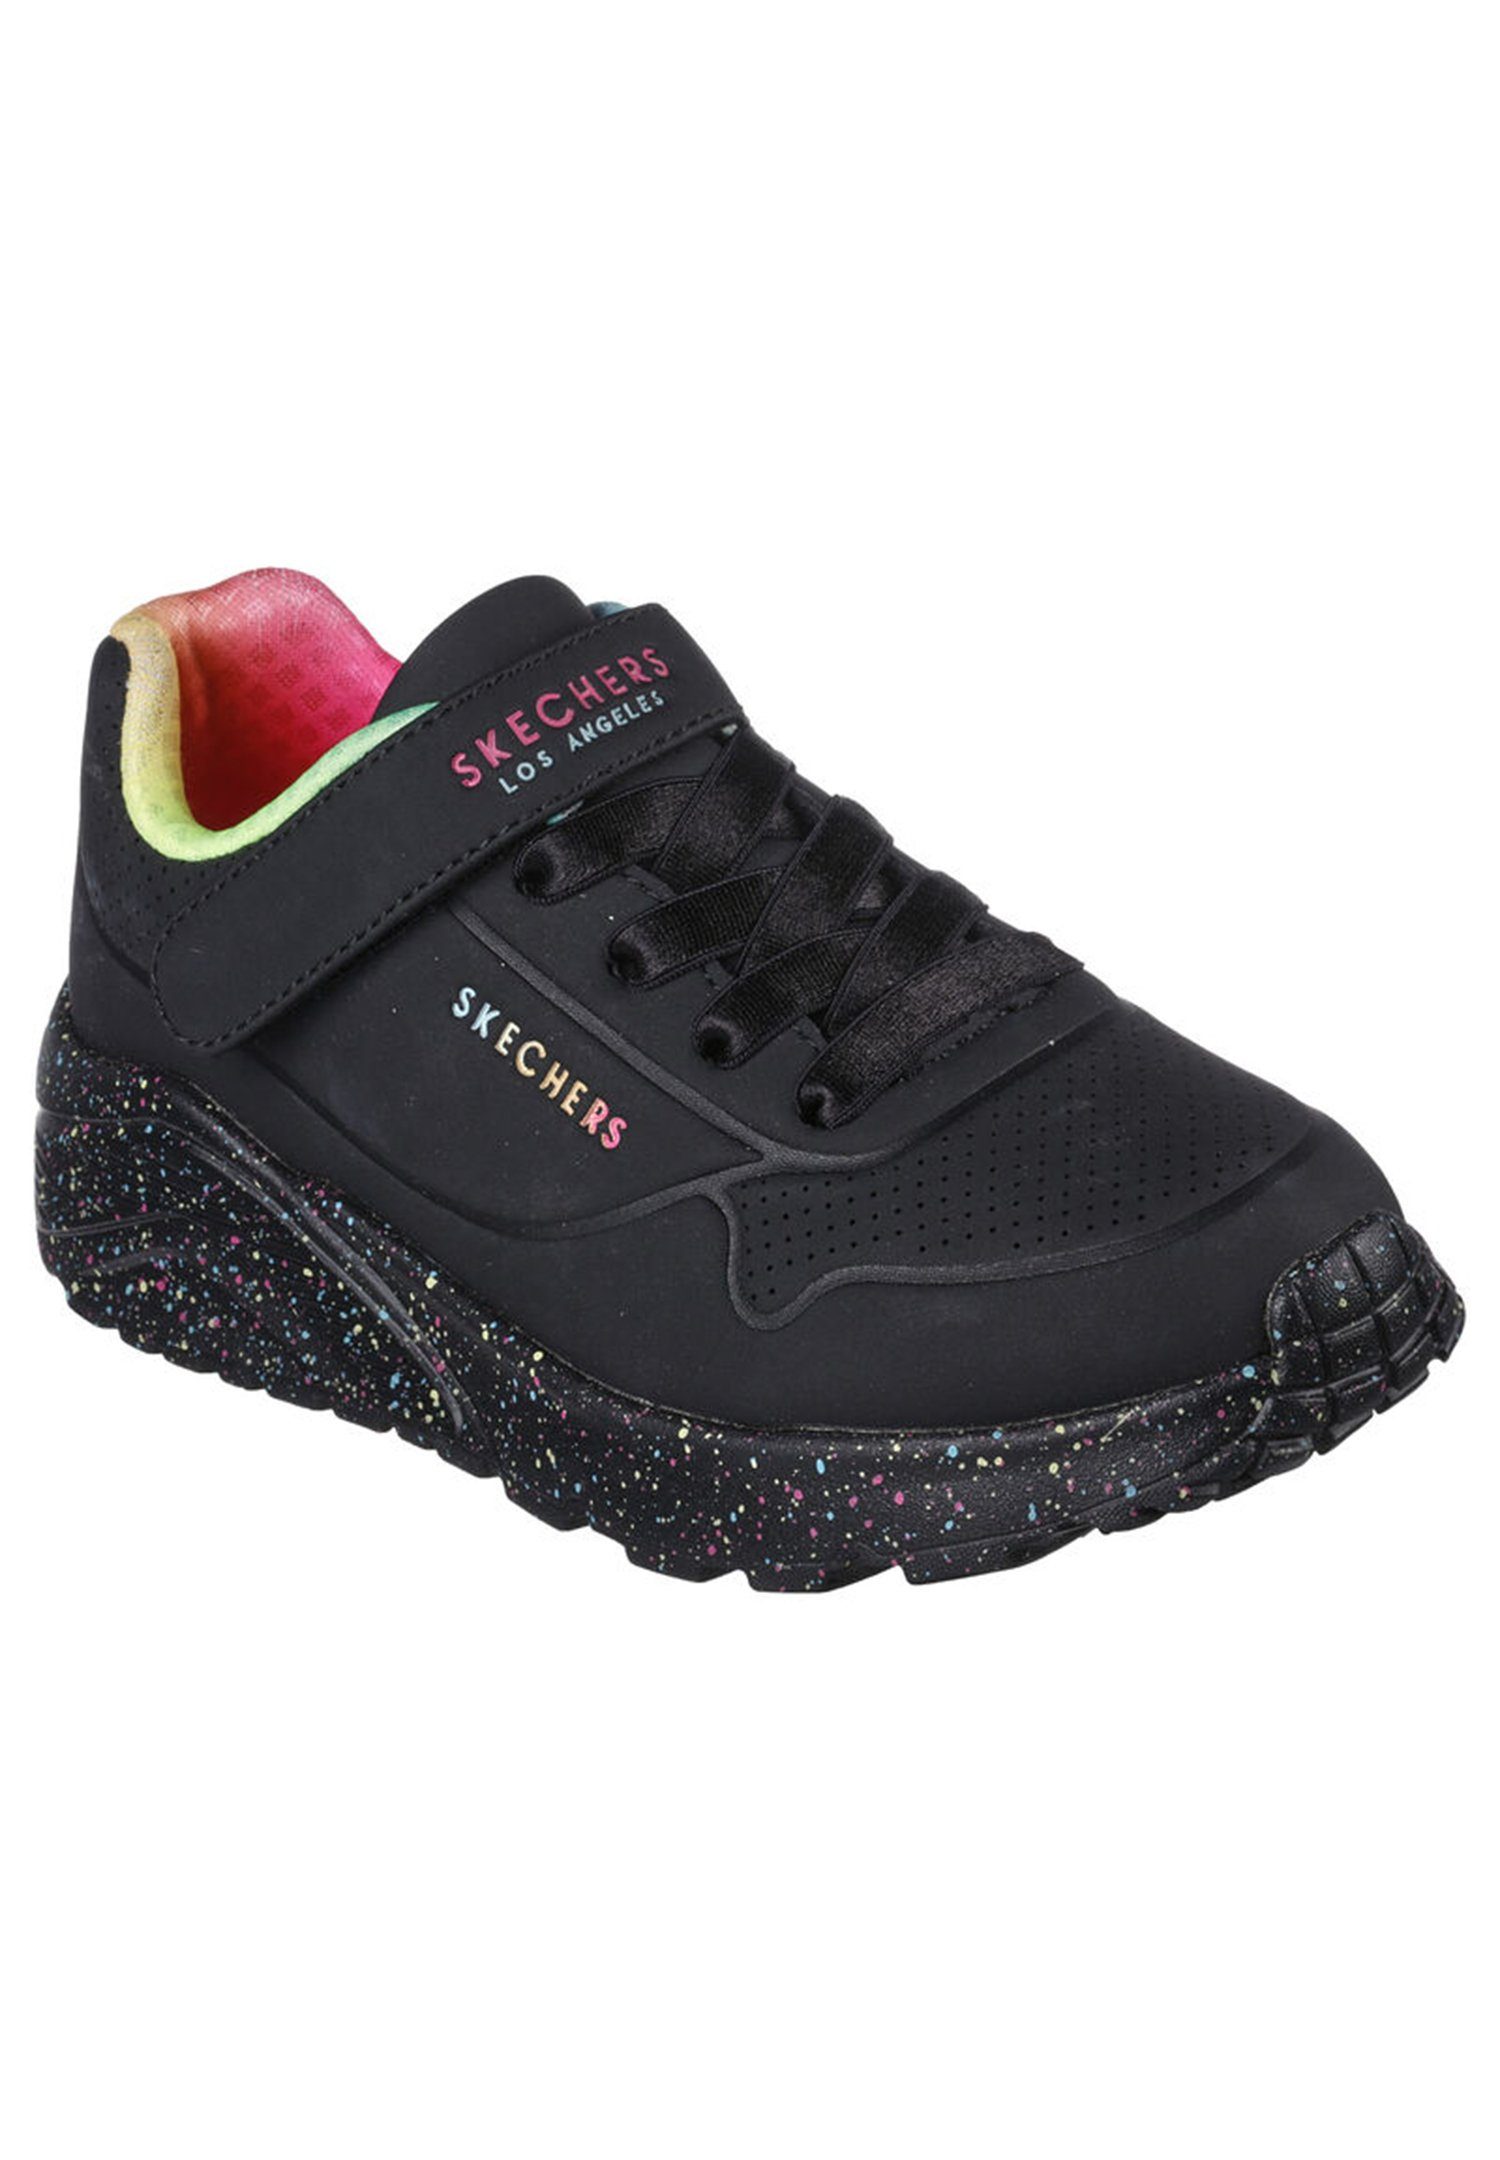 Skechers Uno Lite - RAINBOW SPECKS Sneaker